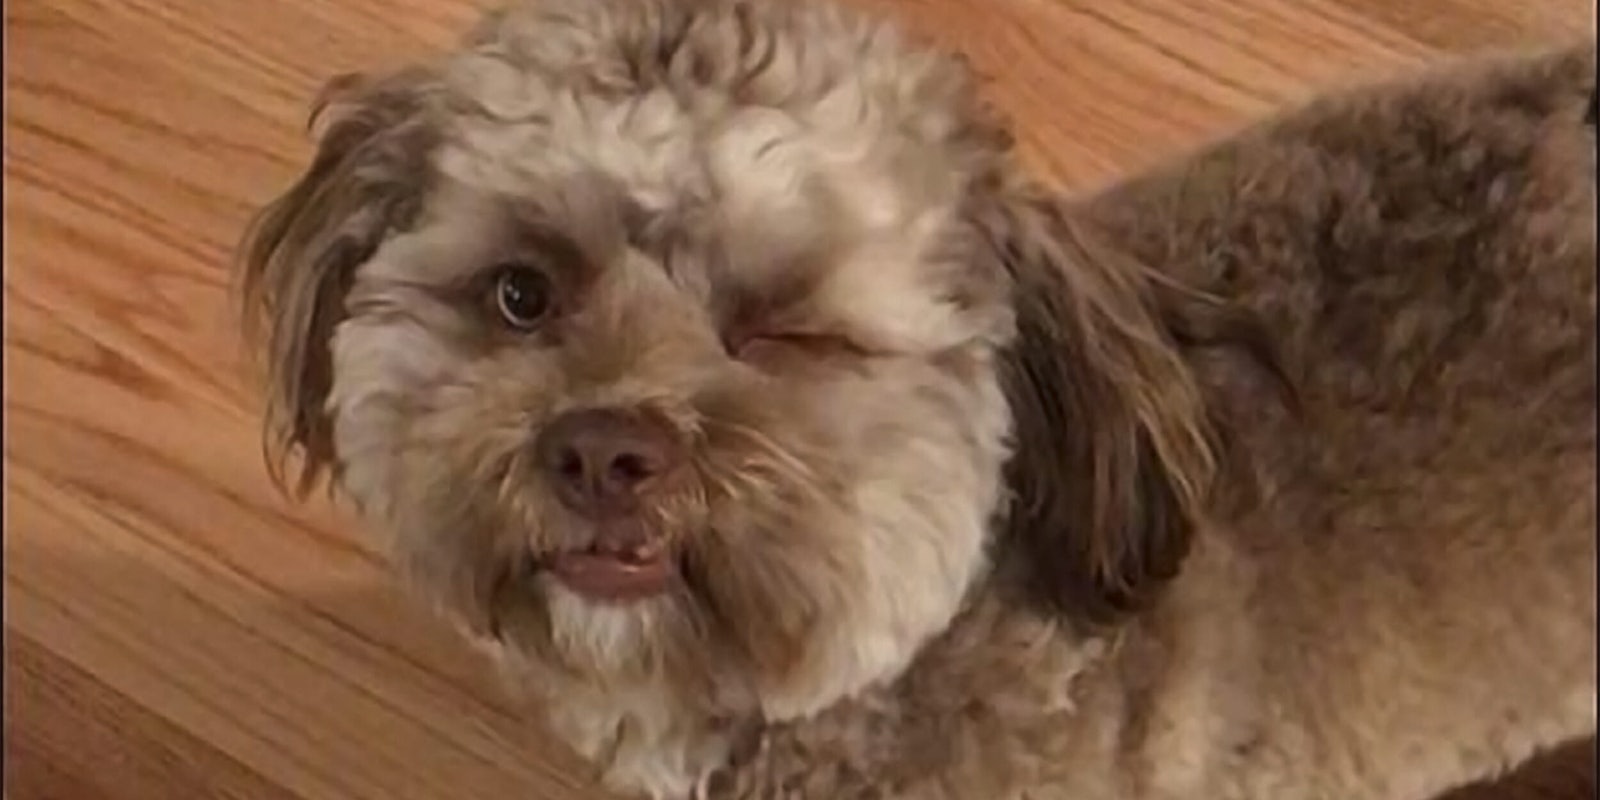 Dog with a human face winking at camera